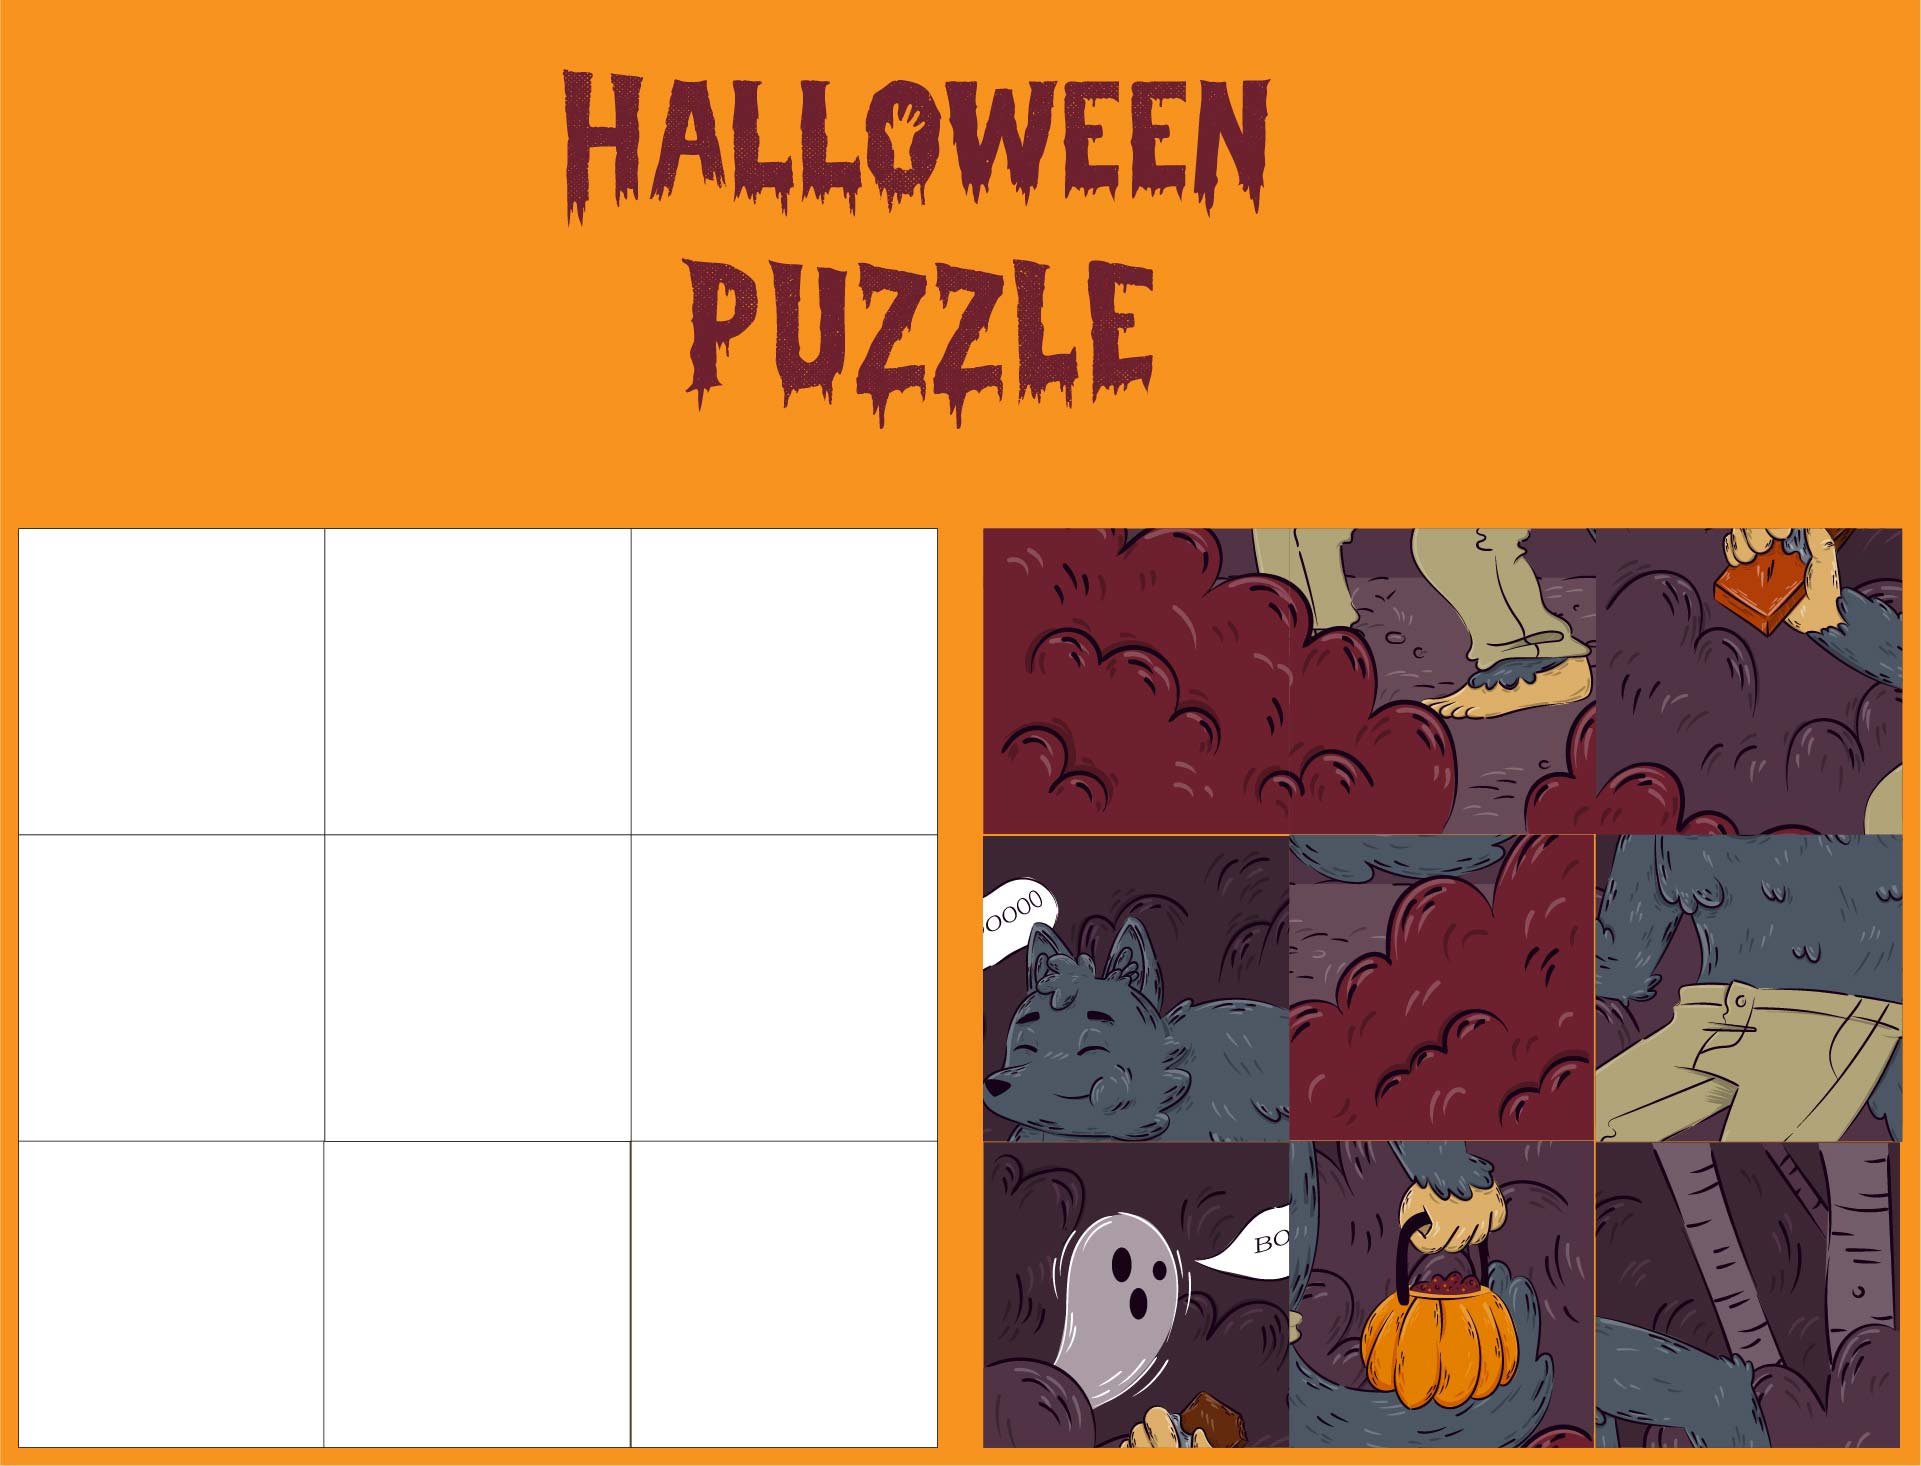 Halloween Puzzles Preschool Activity Printable